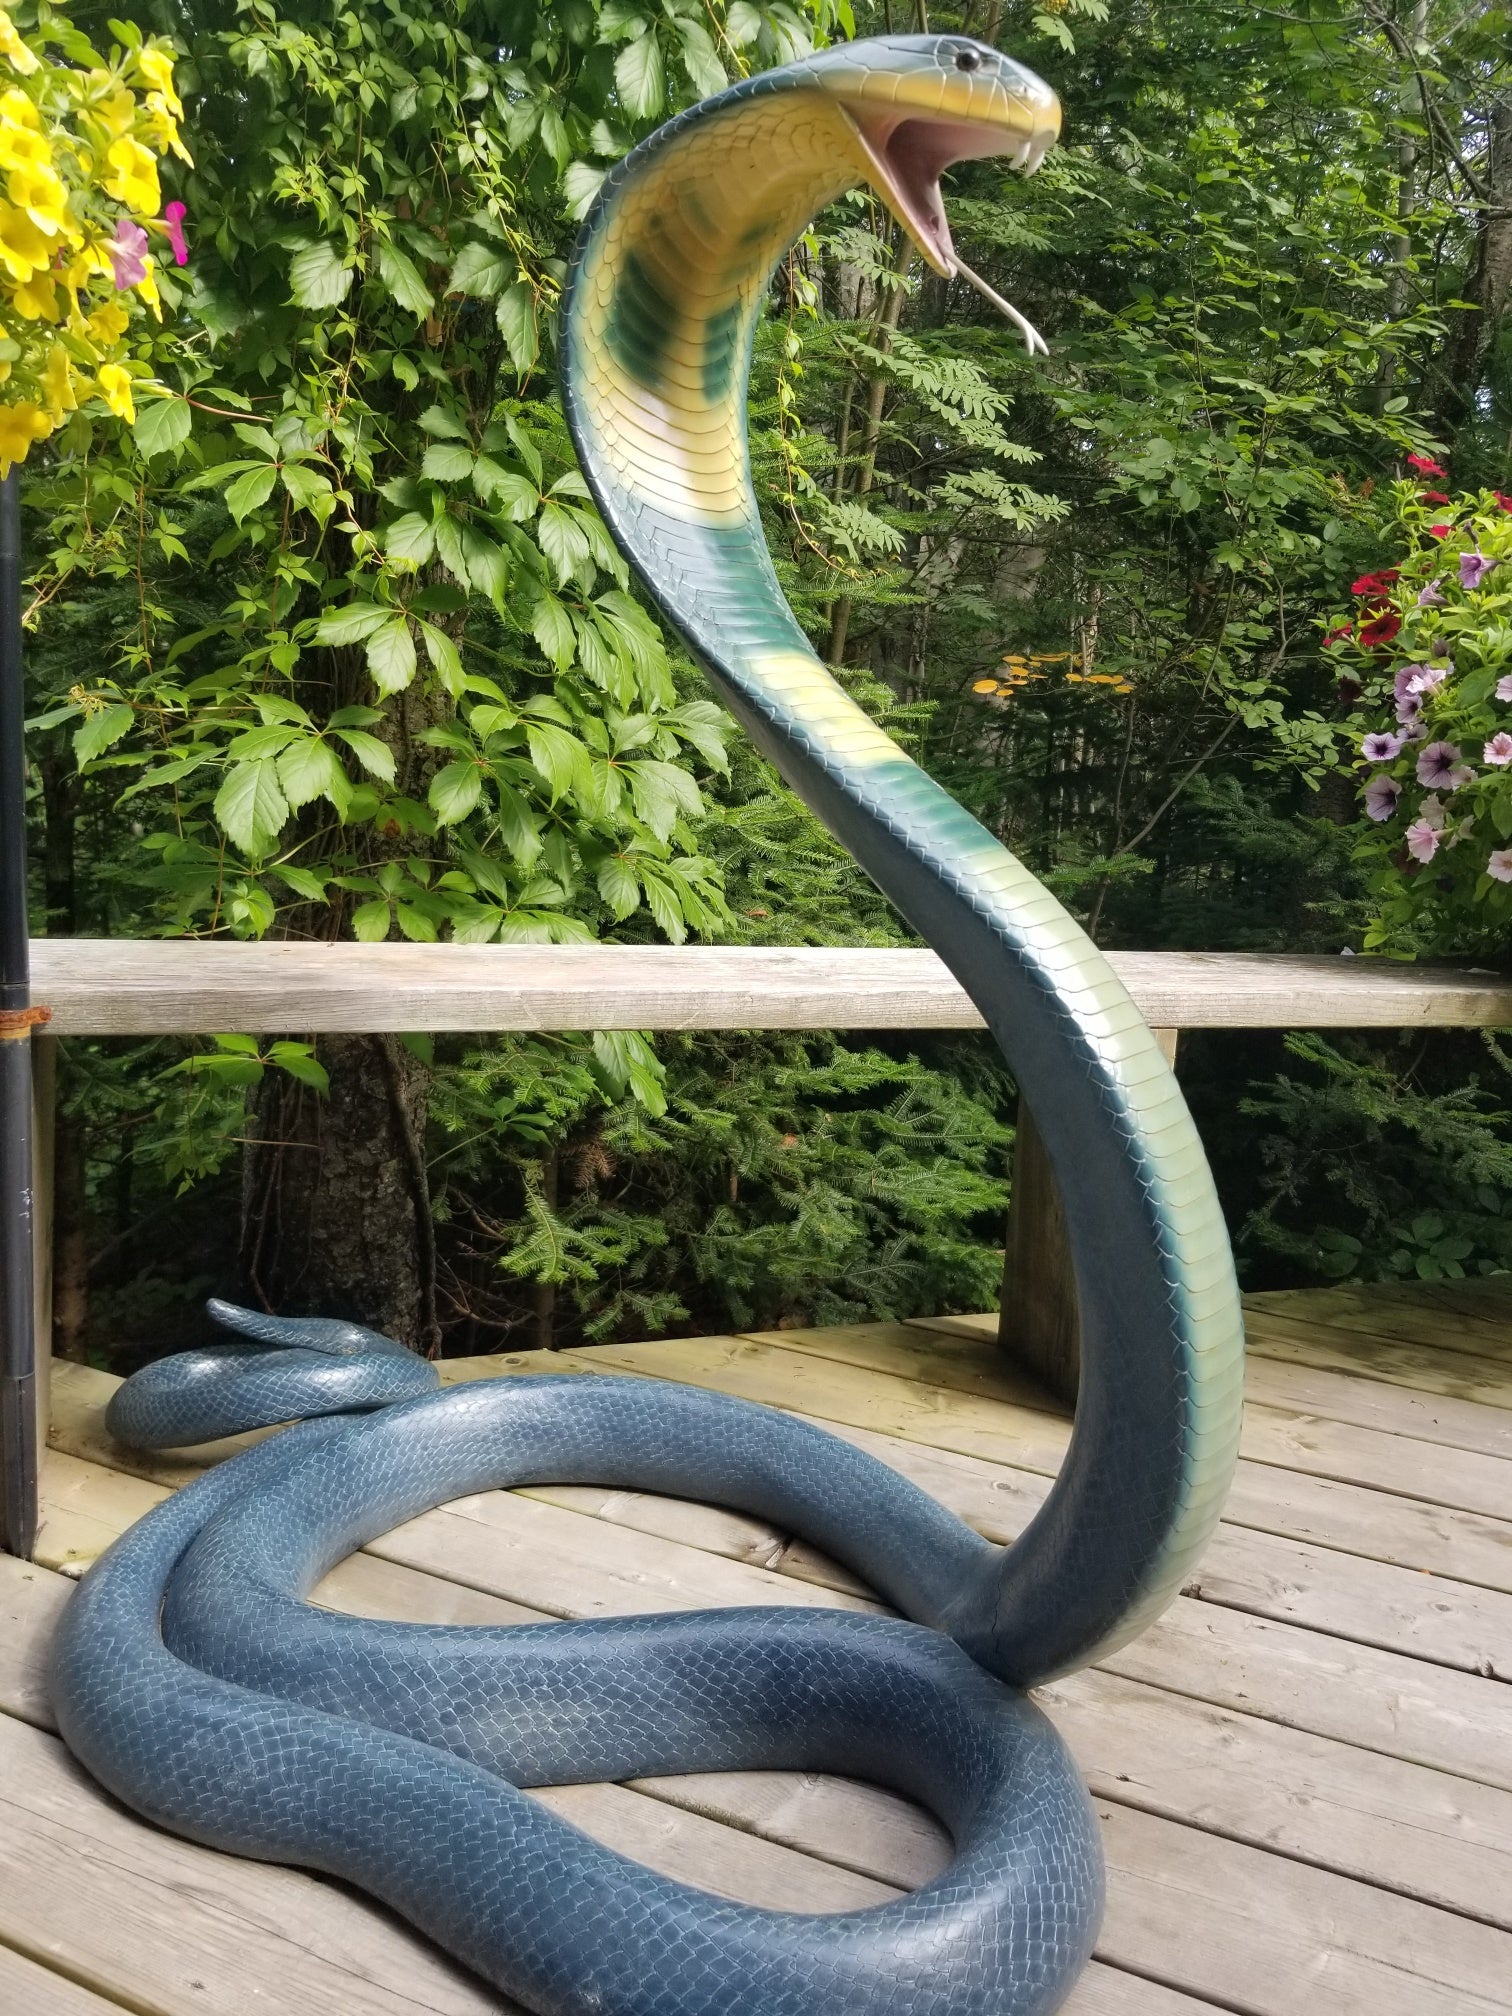 king cobra snake statue for sale